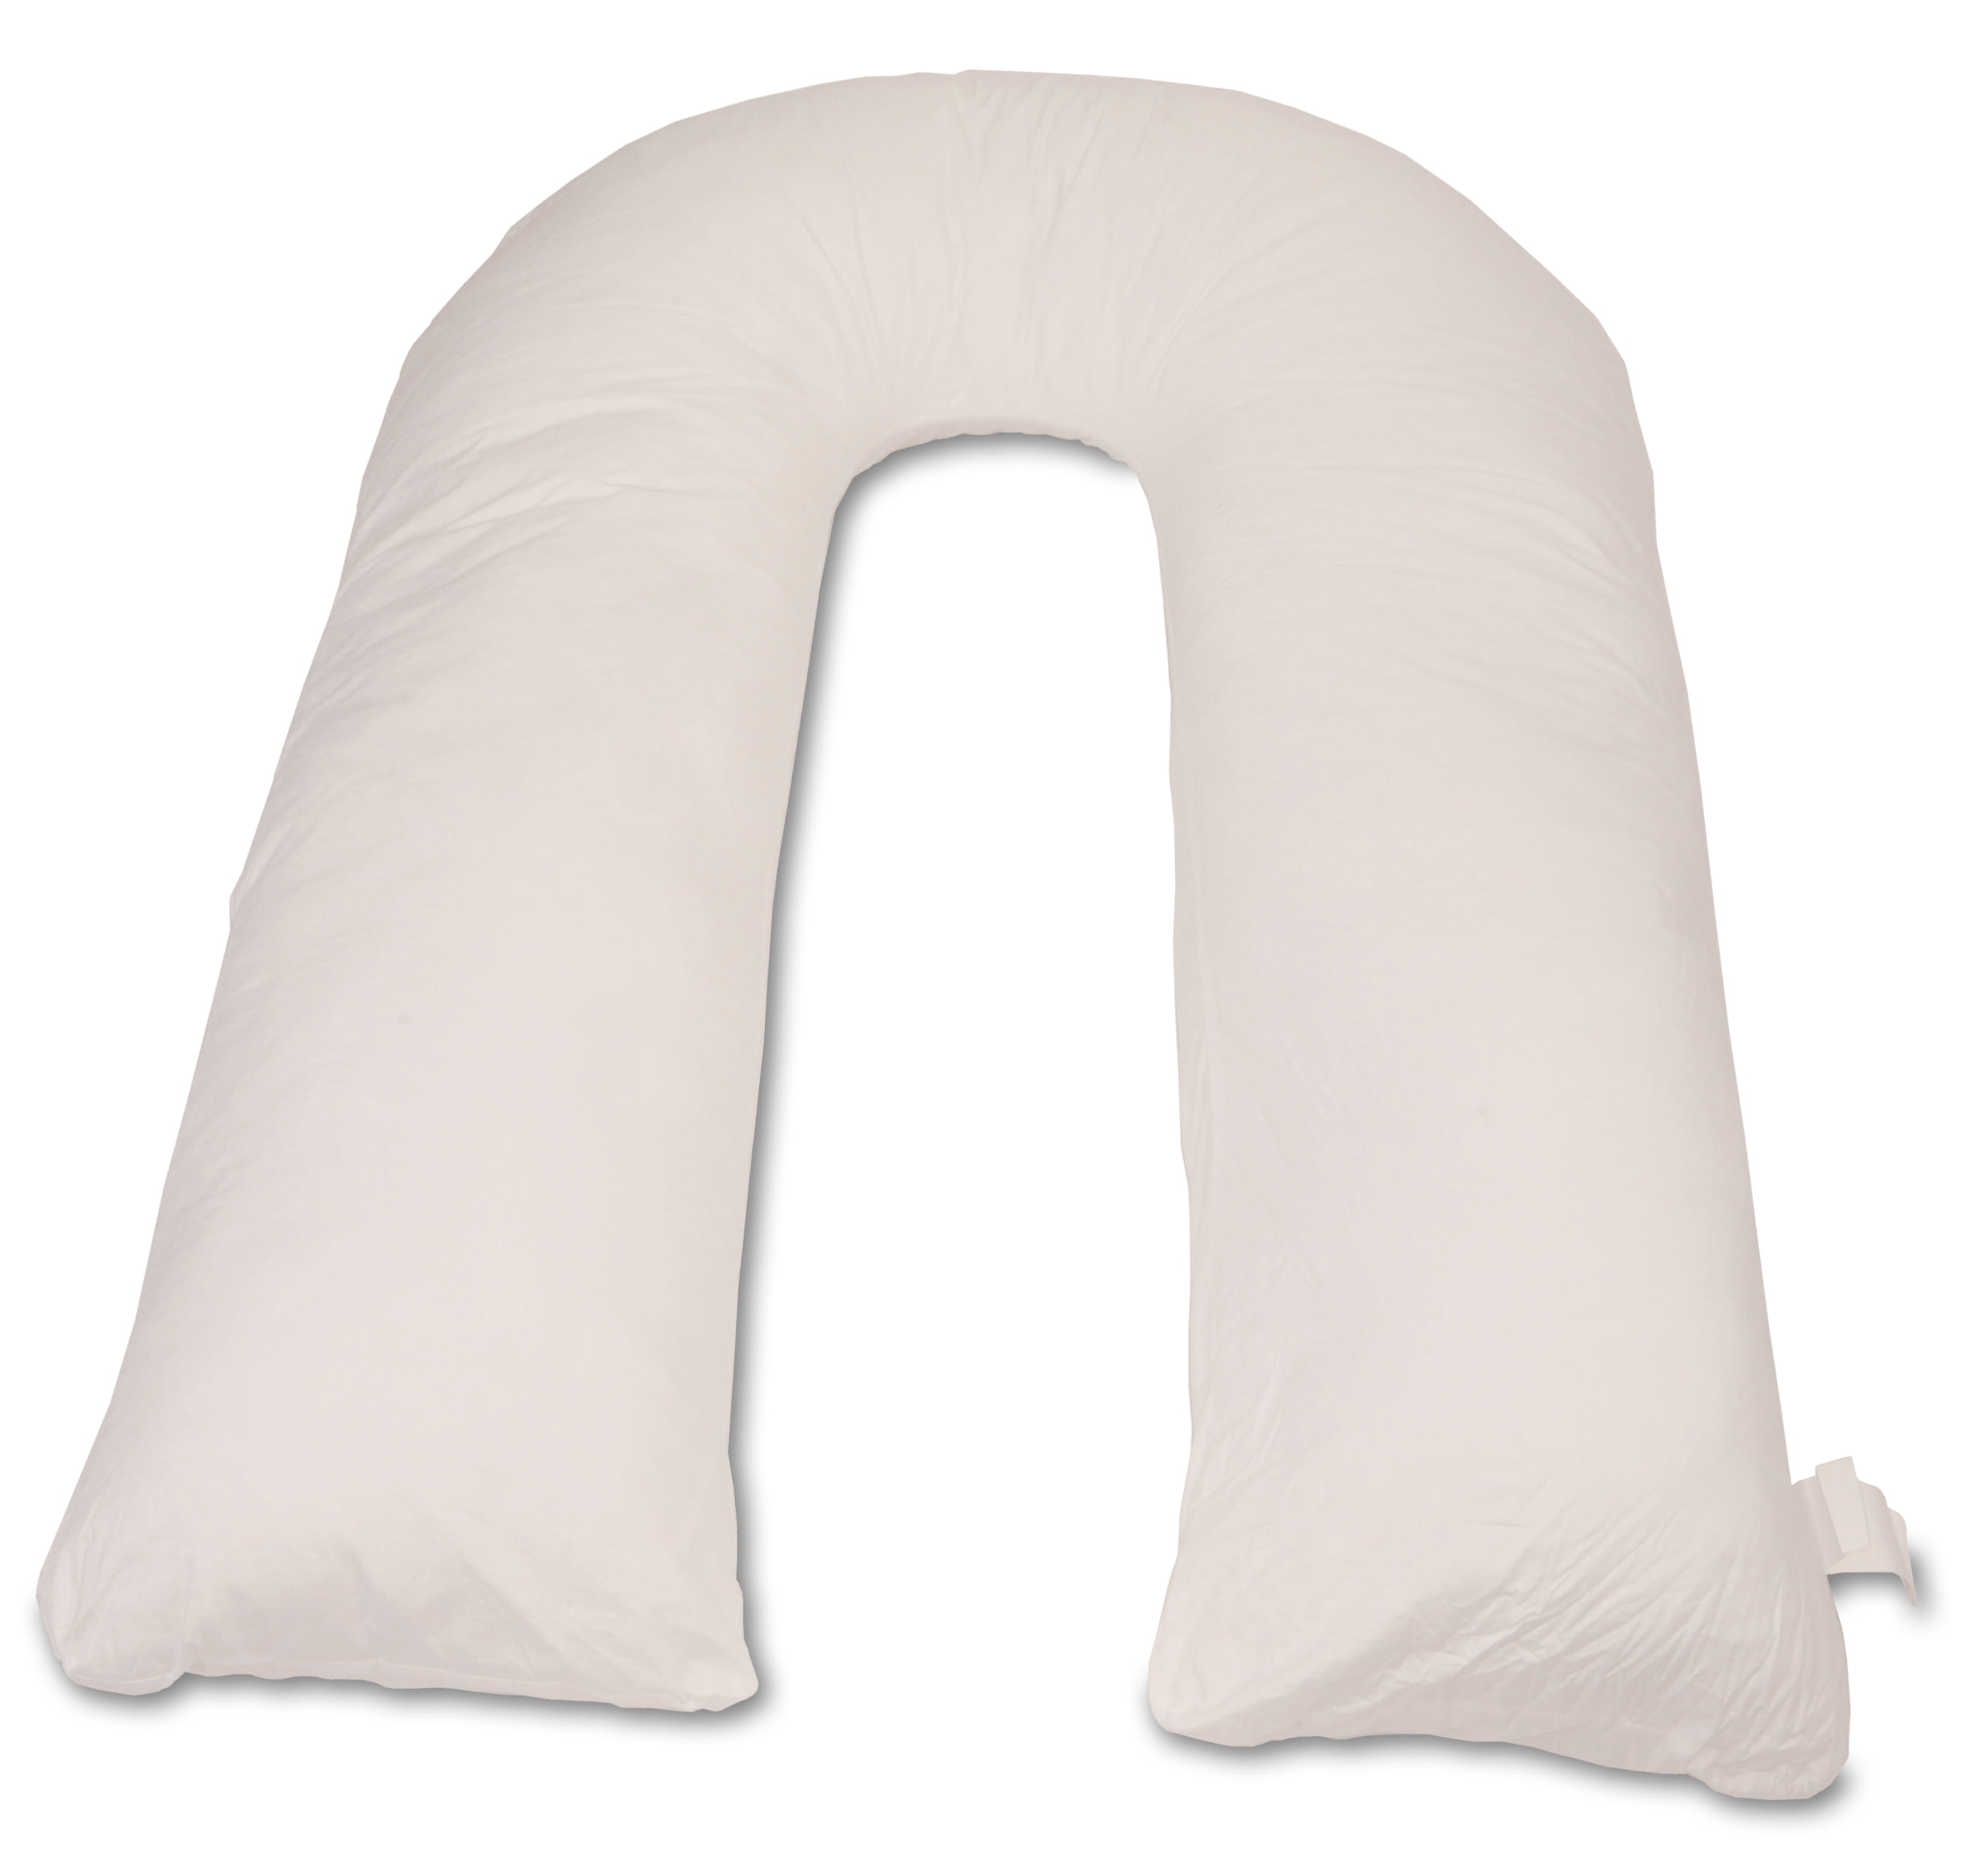 V Shaped Pillows White Back Support Extra Filled for Pregnancy Maternity Nursing 